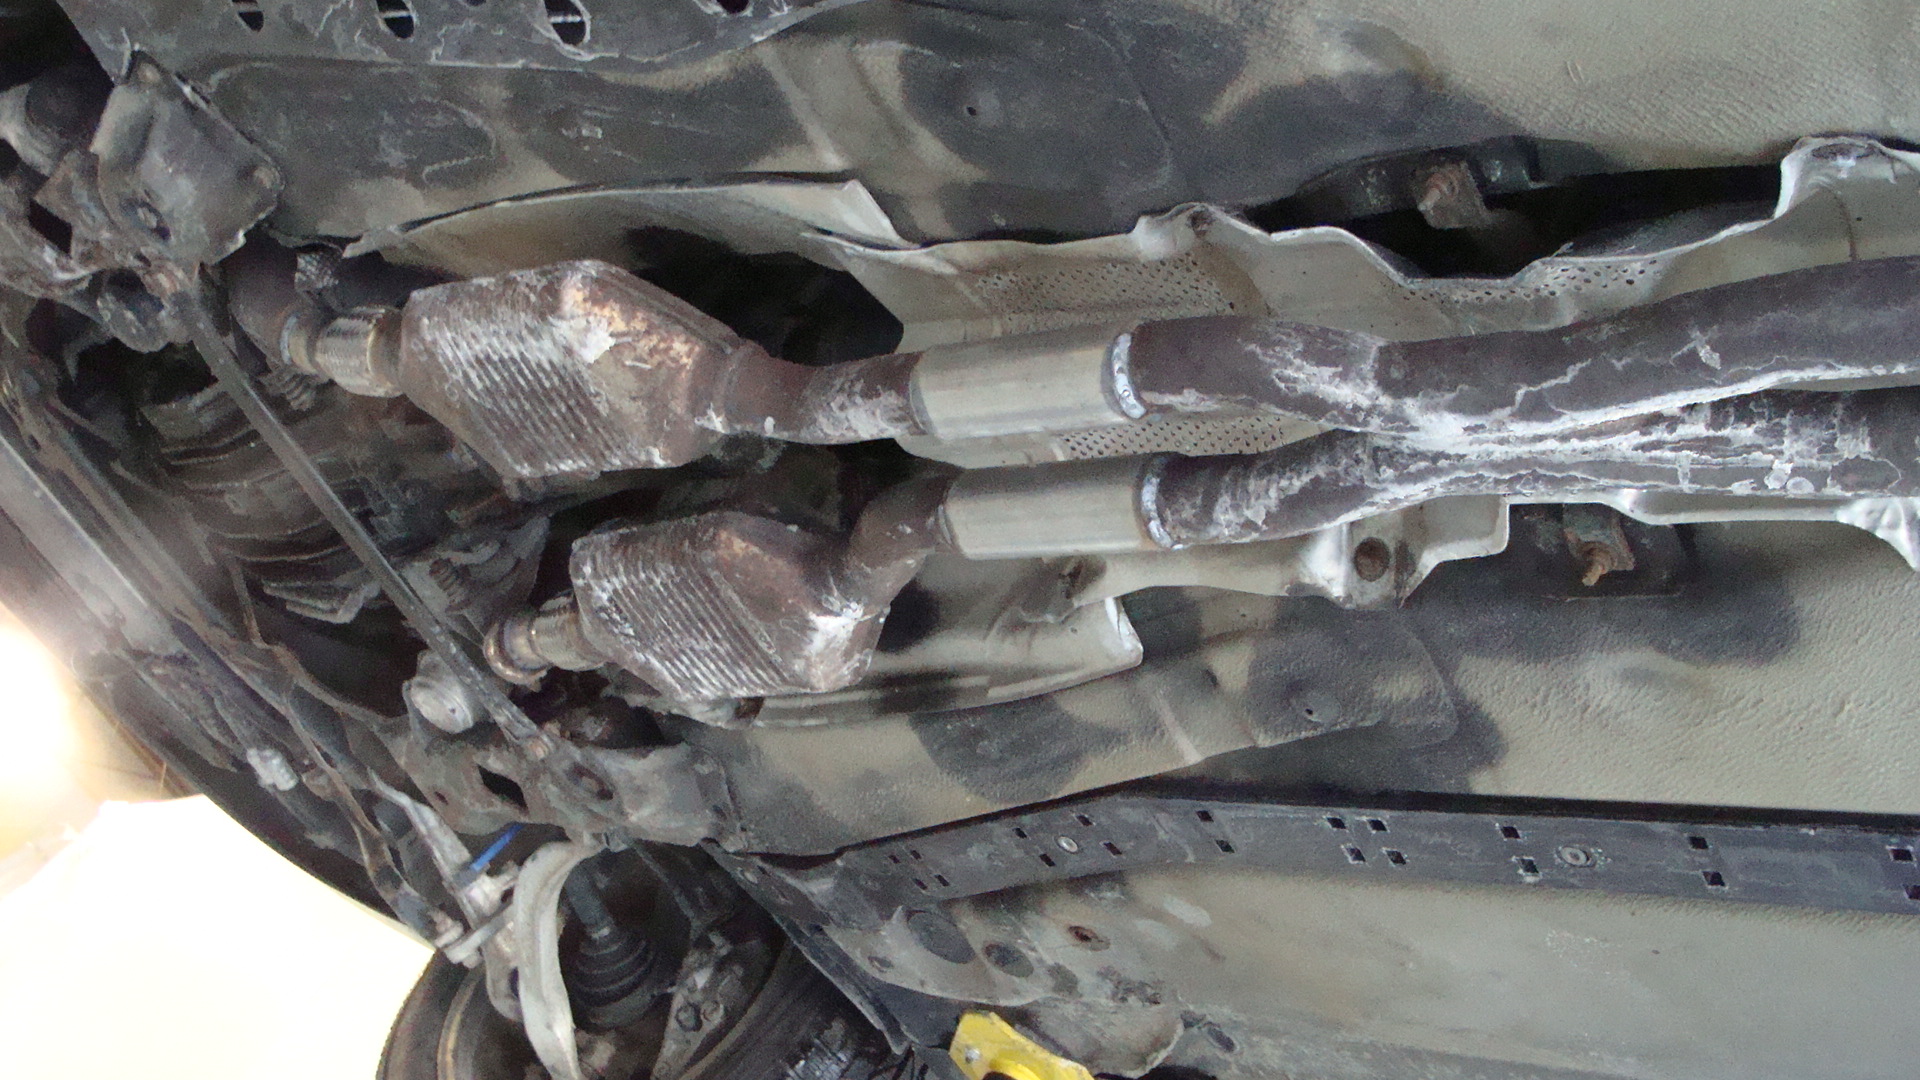 Audi Allroad Exhaust Sleeve Repair